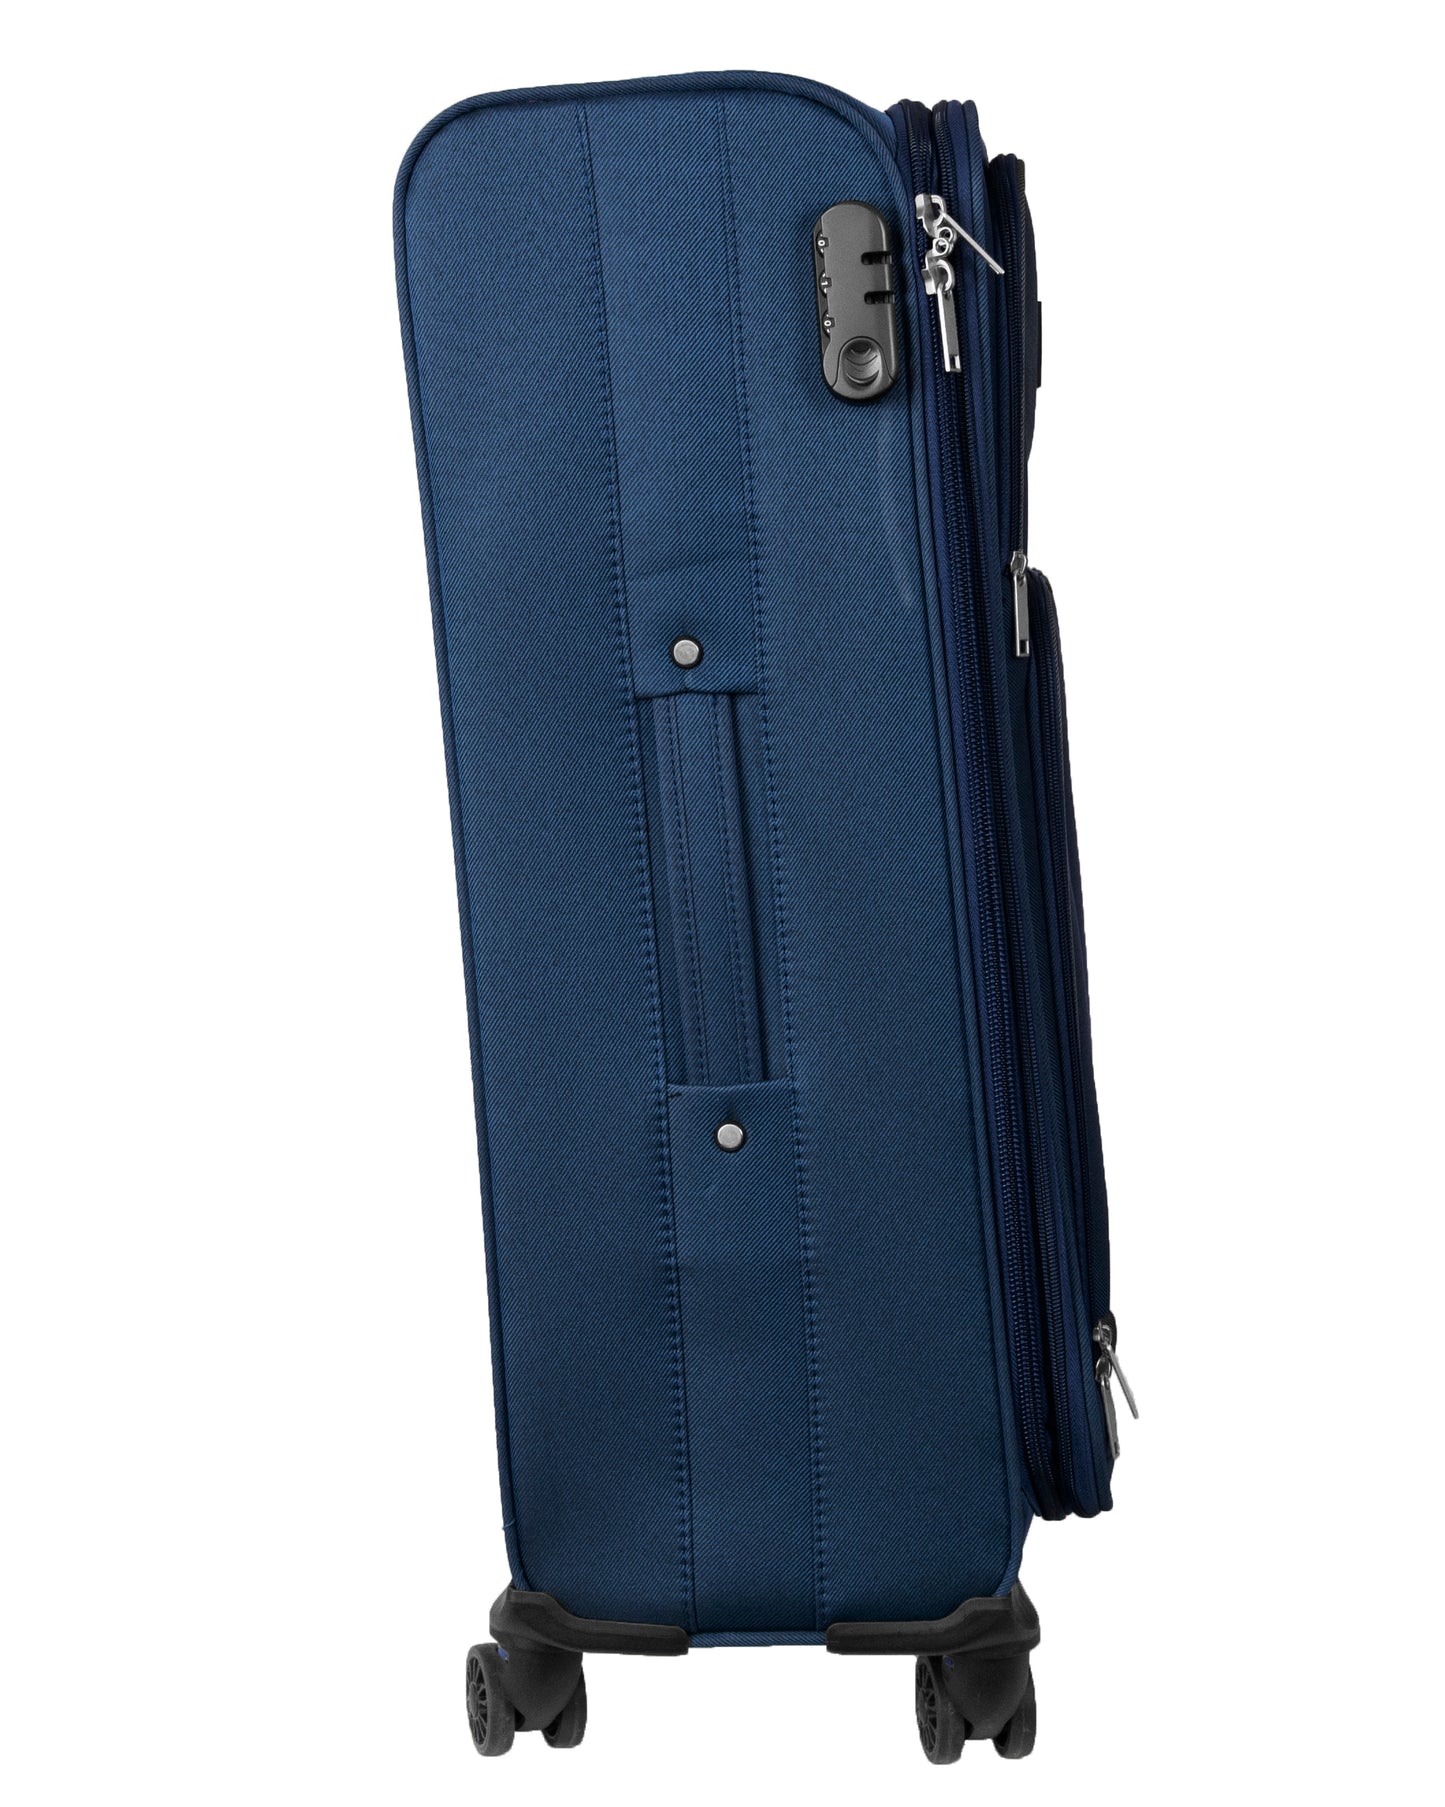 4 Wheels Soft Case Luggage Navy